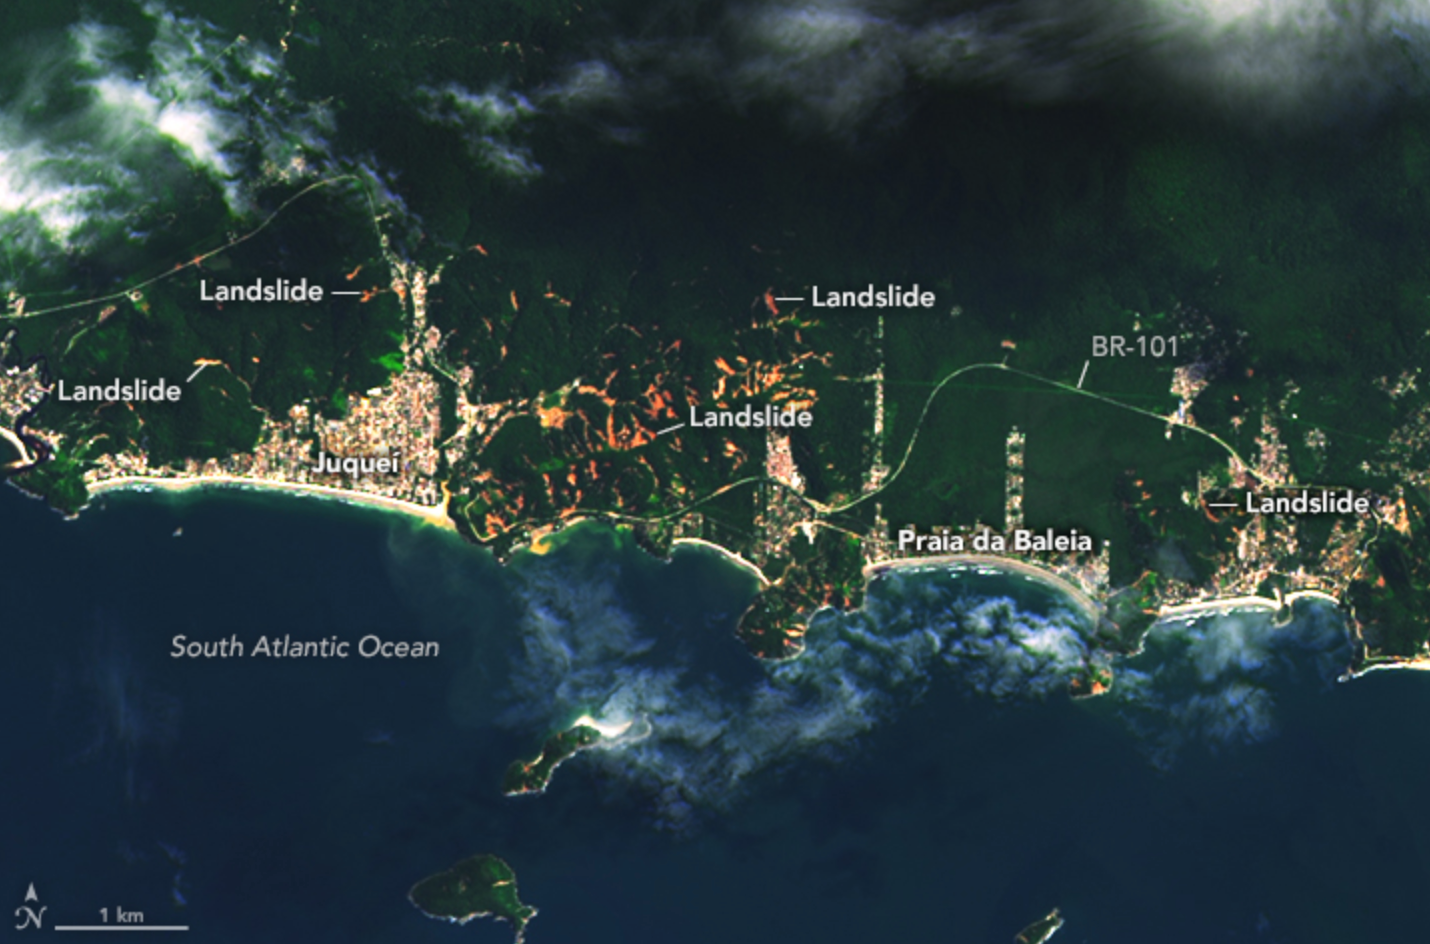 Landsat 8 satellite image of landslides in the coastal municipality of São Sebastião, Brazil